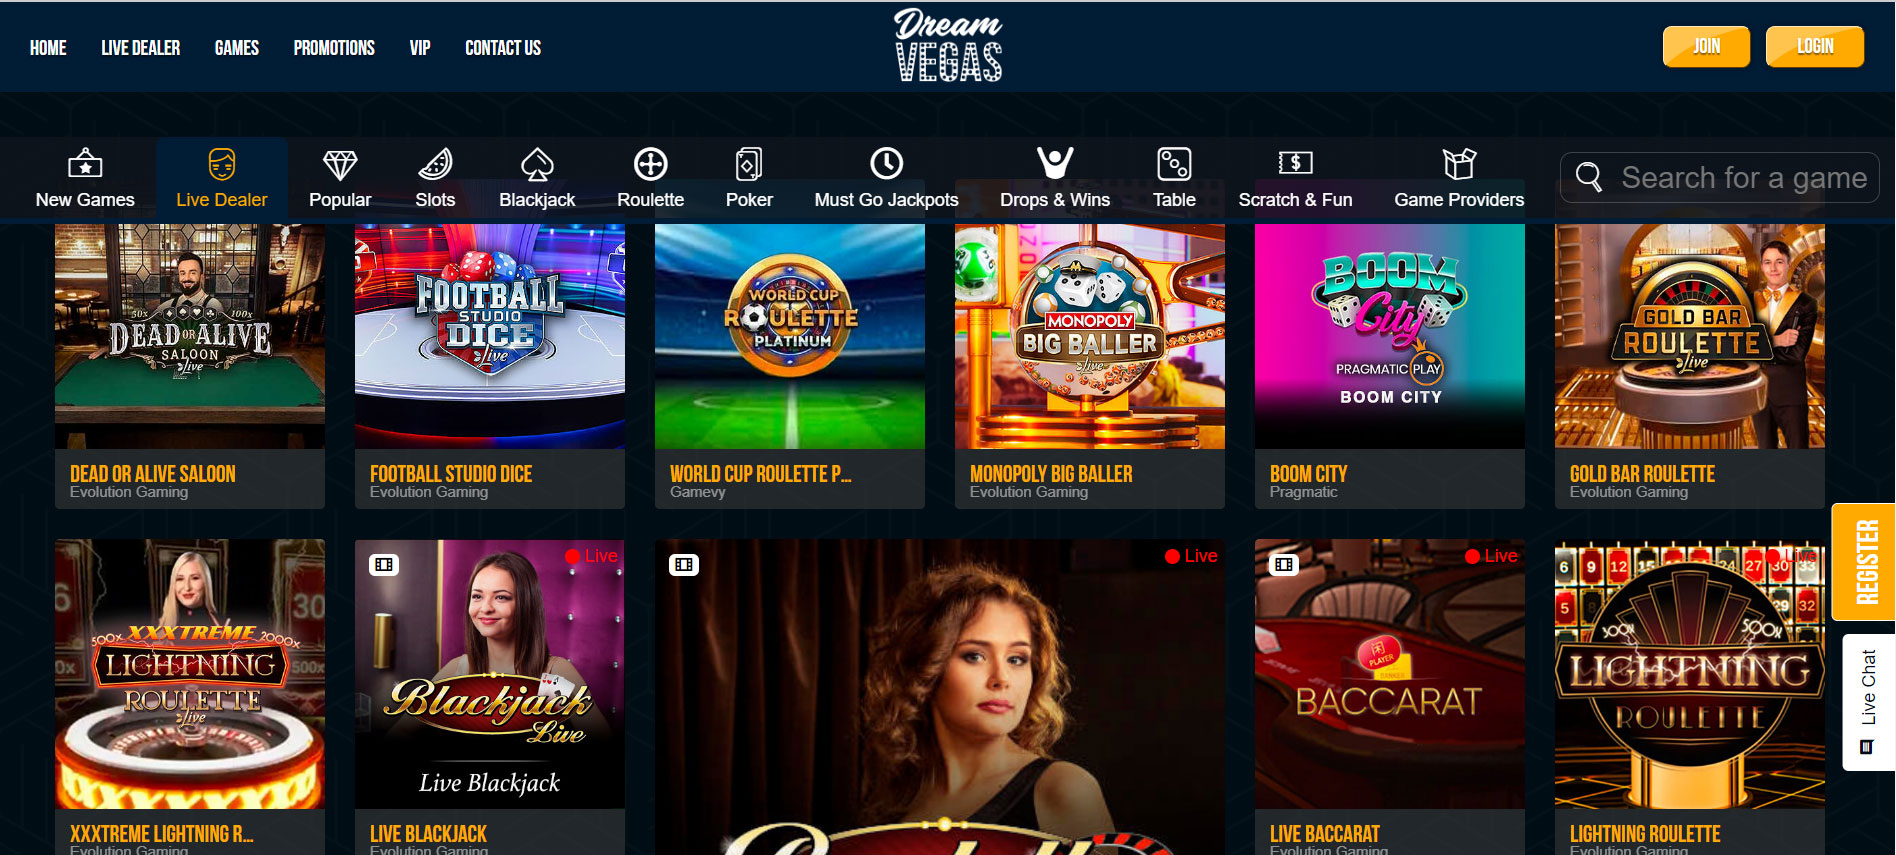 Dream Vegas Casino Live Casino